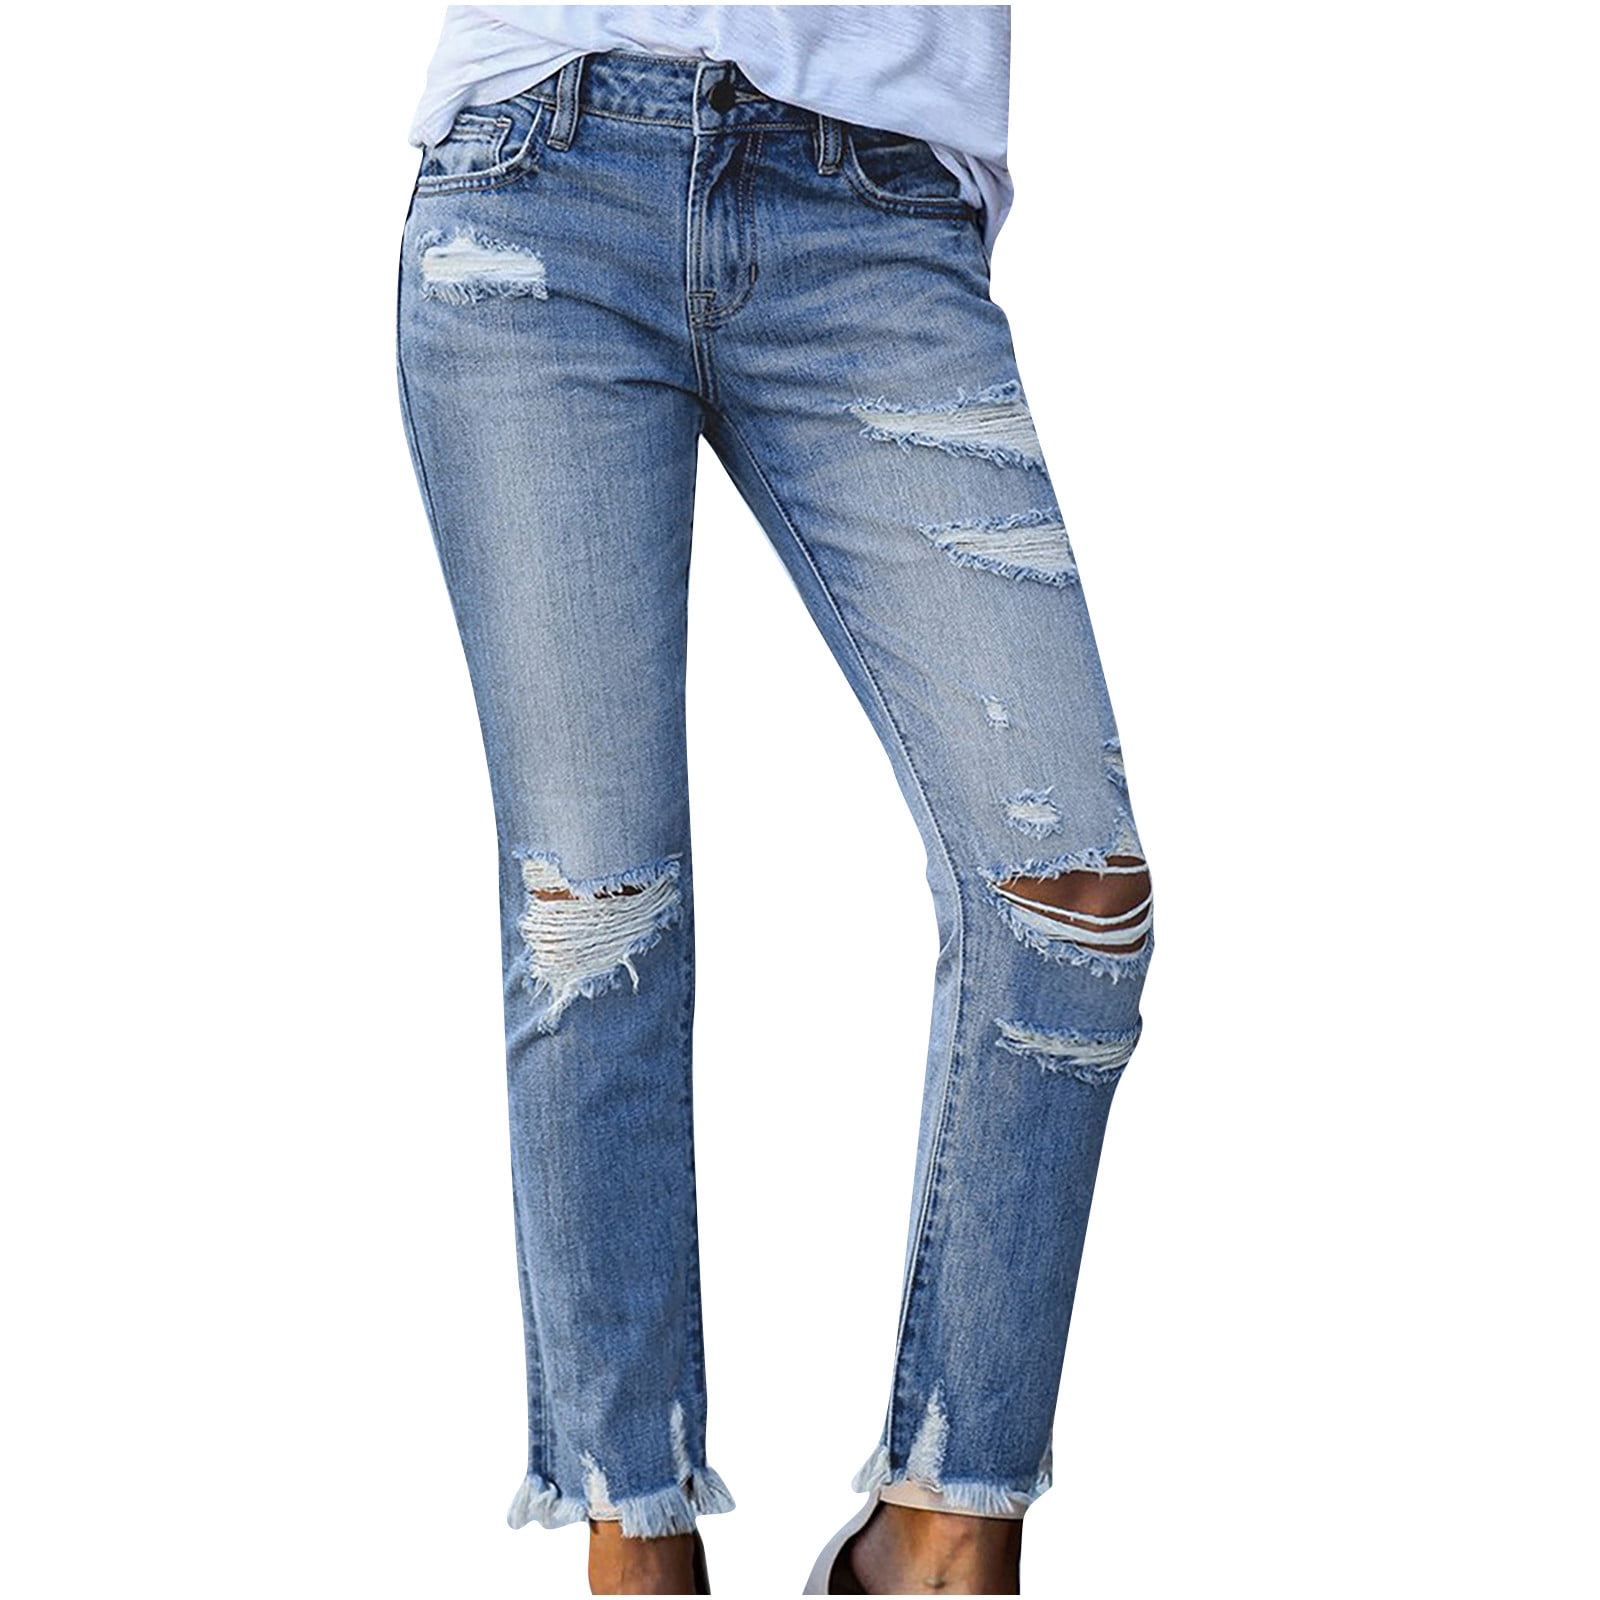 YWDJ Jeans for Women High Waist Fashion Women Pockets Button Mid